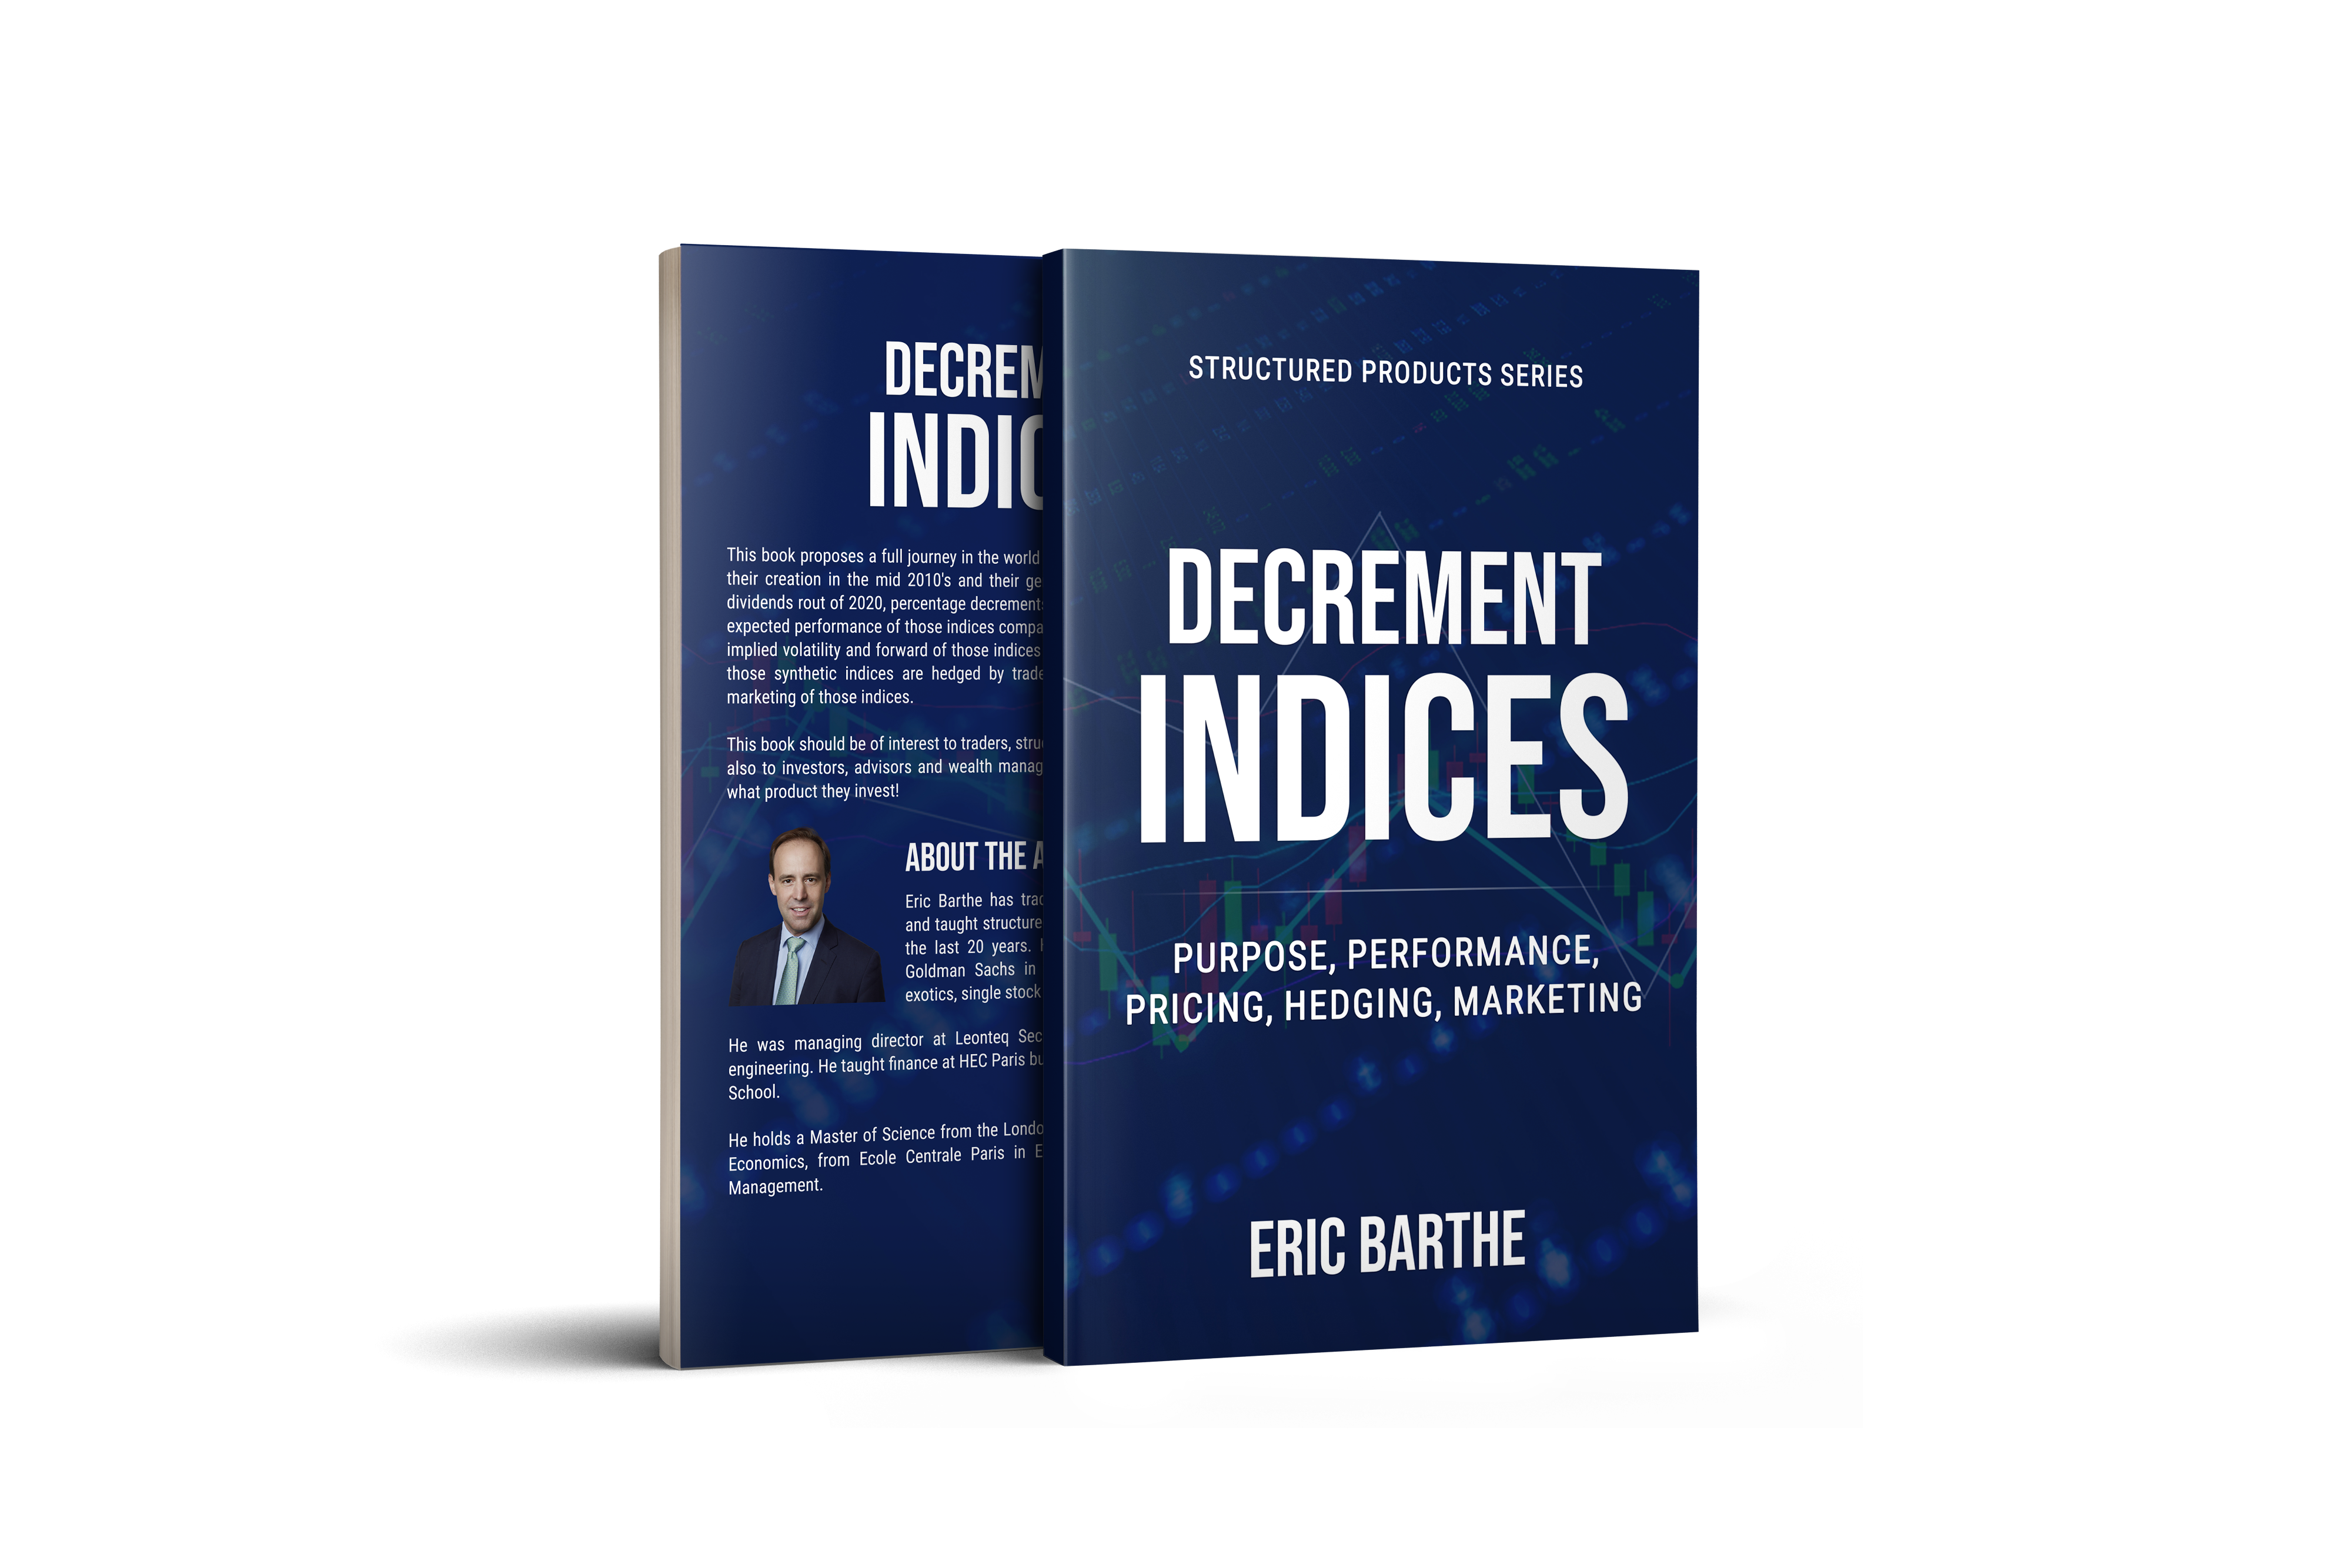 Decrement indices, fixed point decrement or percentage decrement index